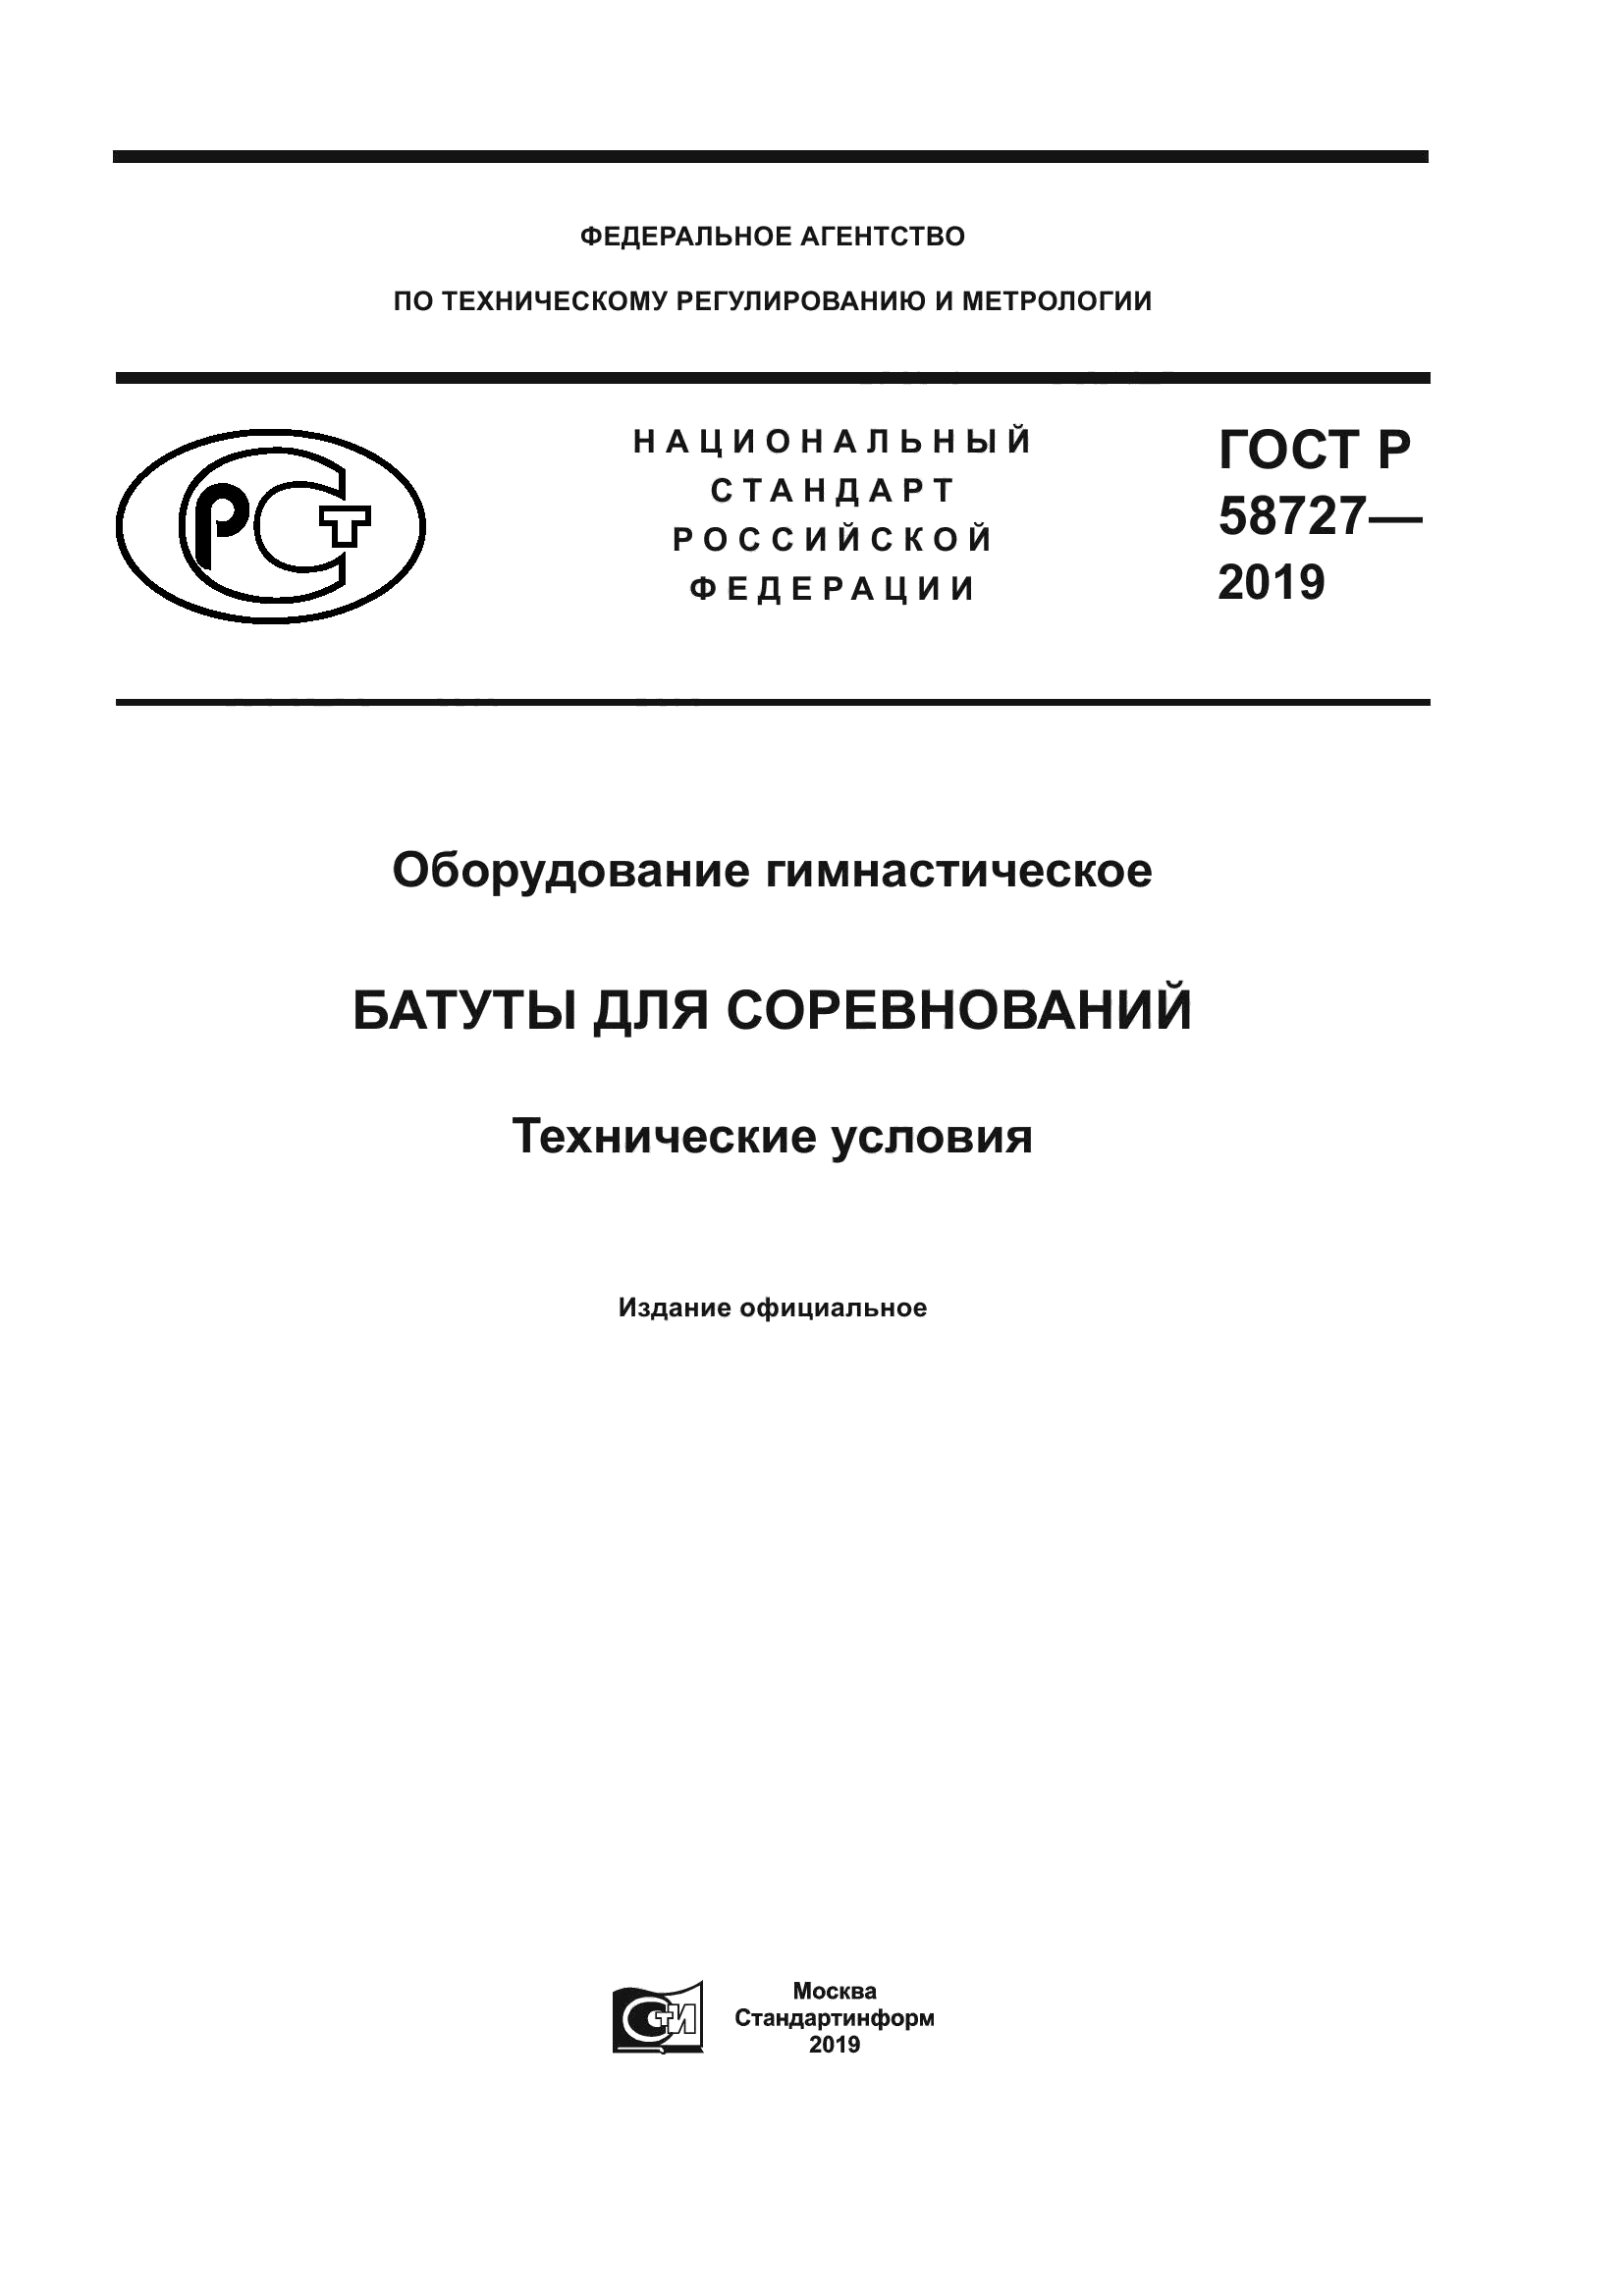 ГОСТ Р 58727-2019